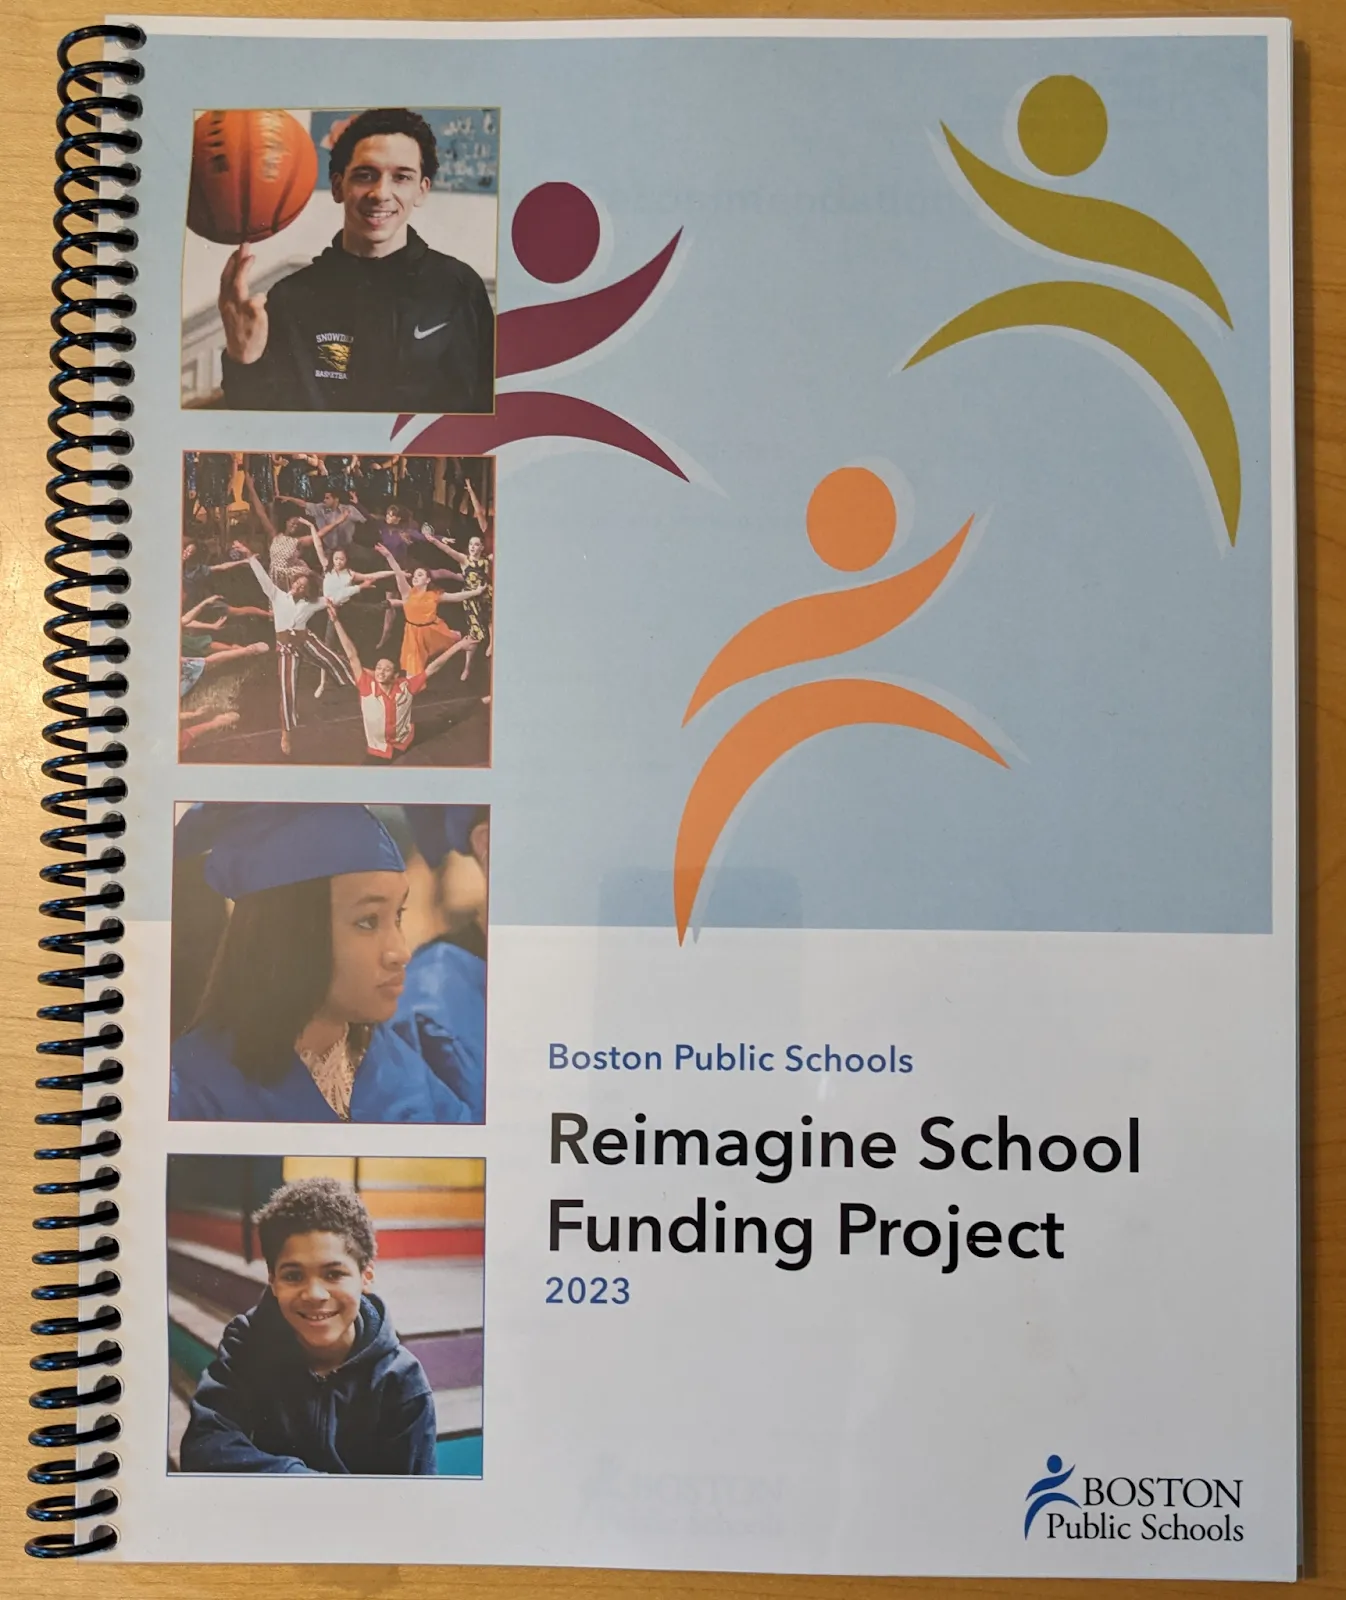 What did the “Reimagine School Funding” Steering Committee imagine?